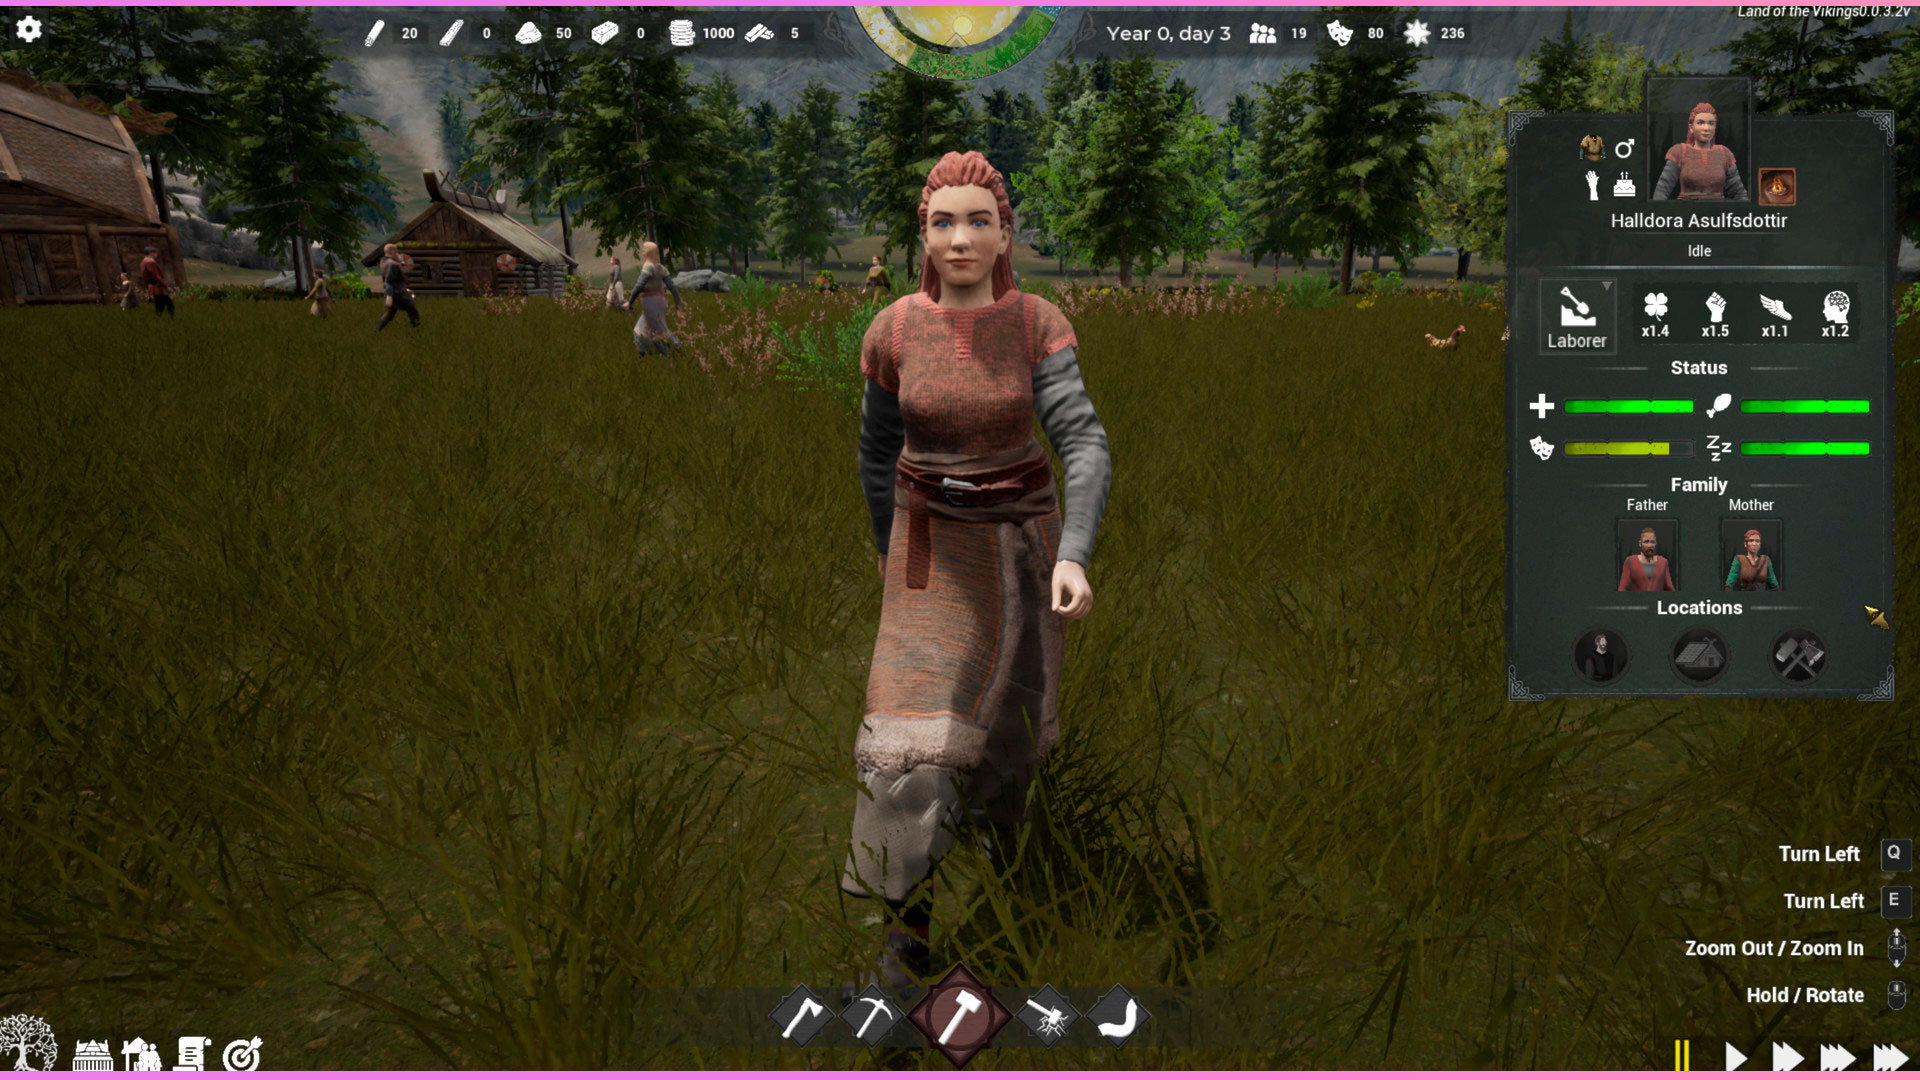 Land of the Vikings game screenshot 1